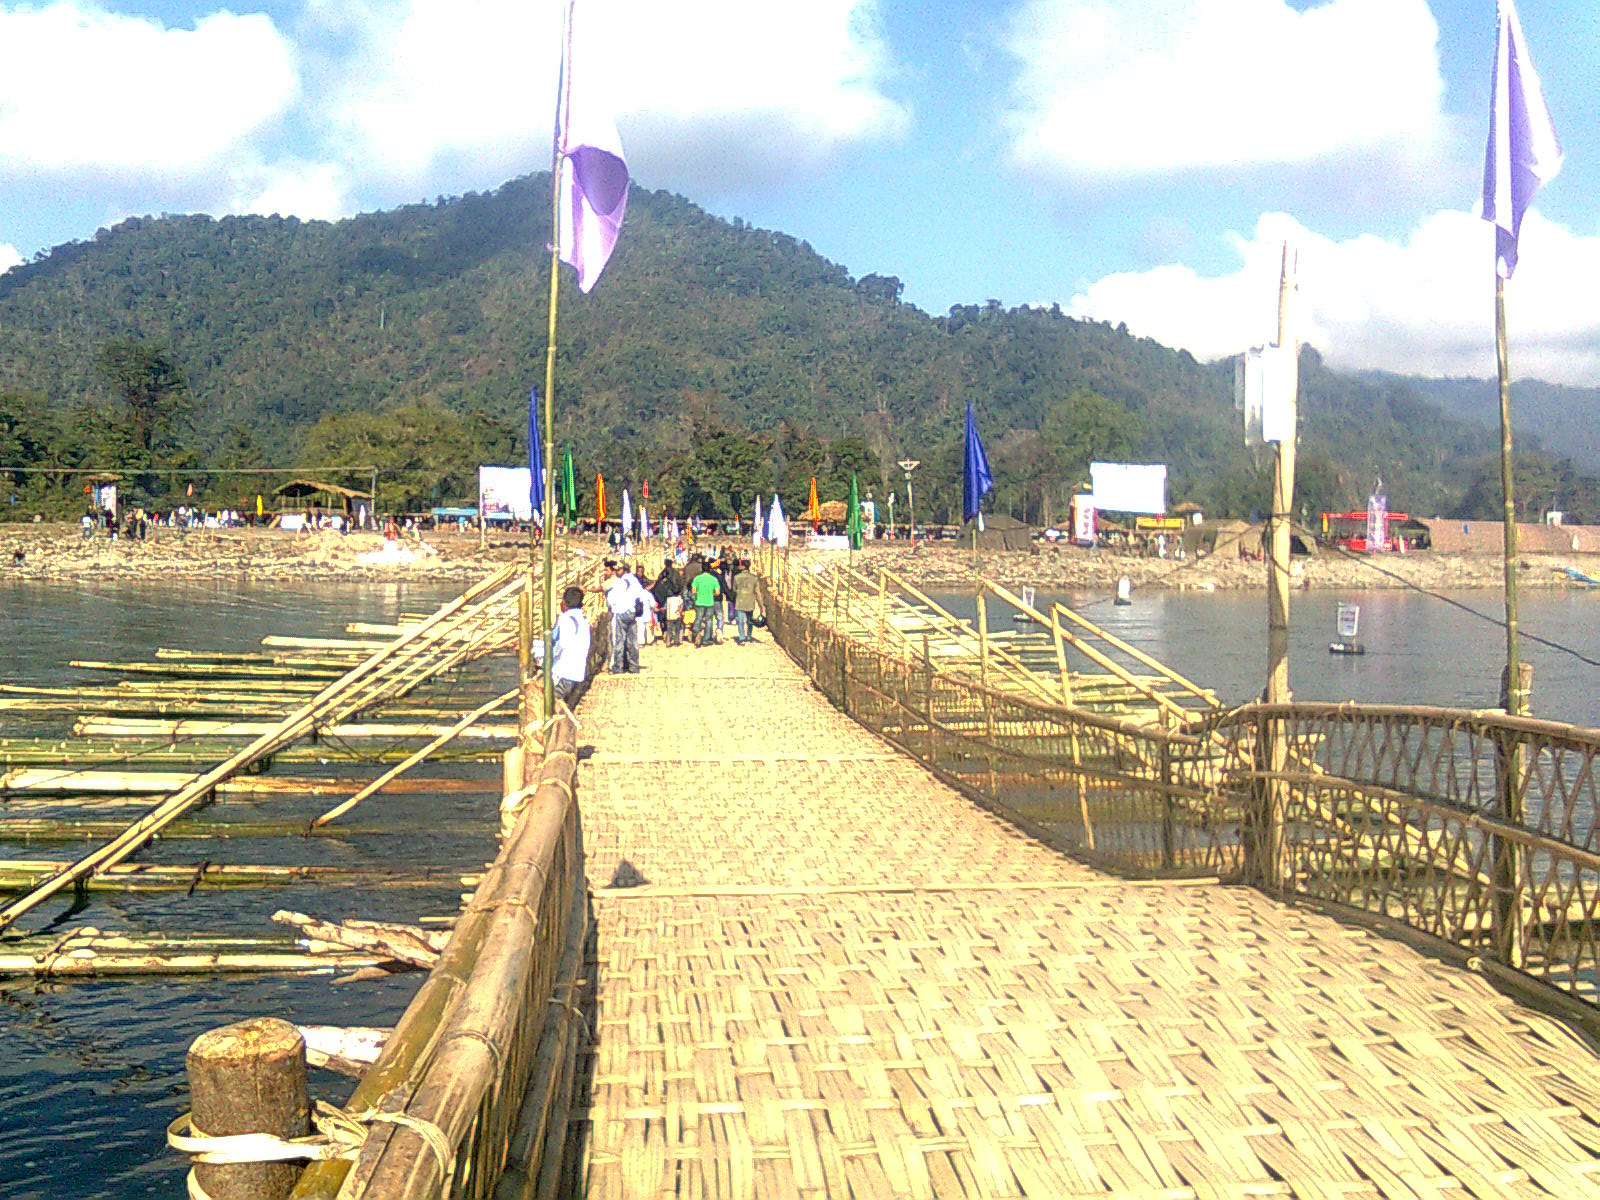 siang river festival